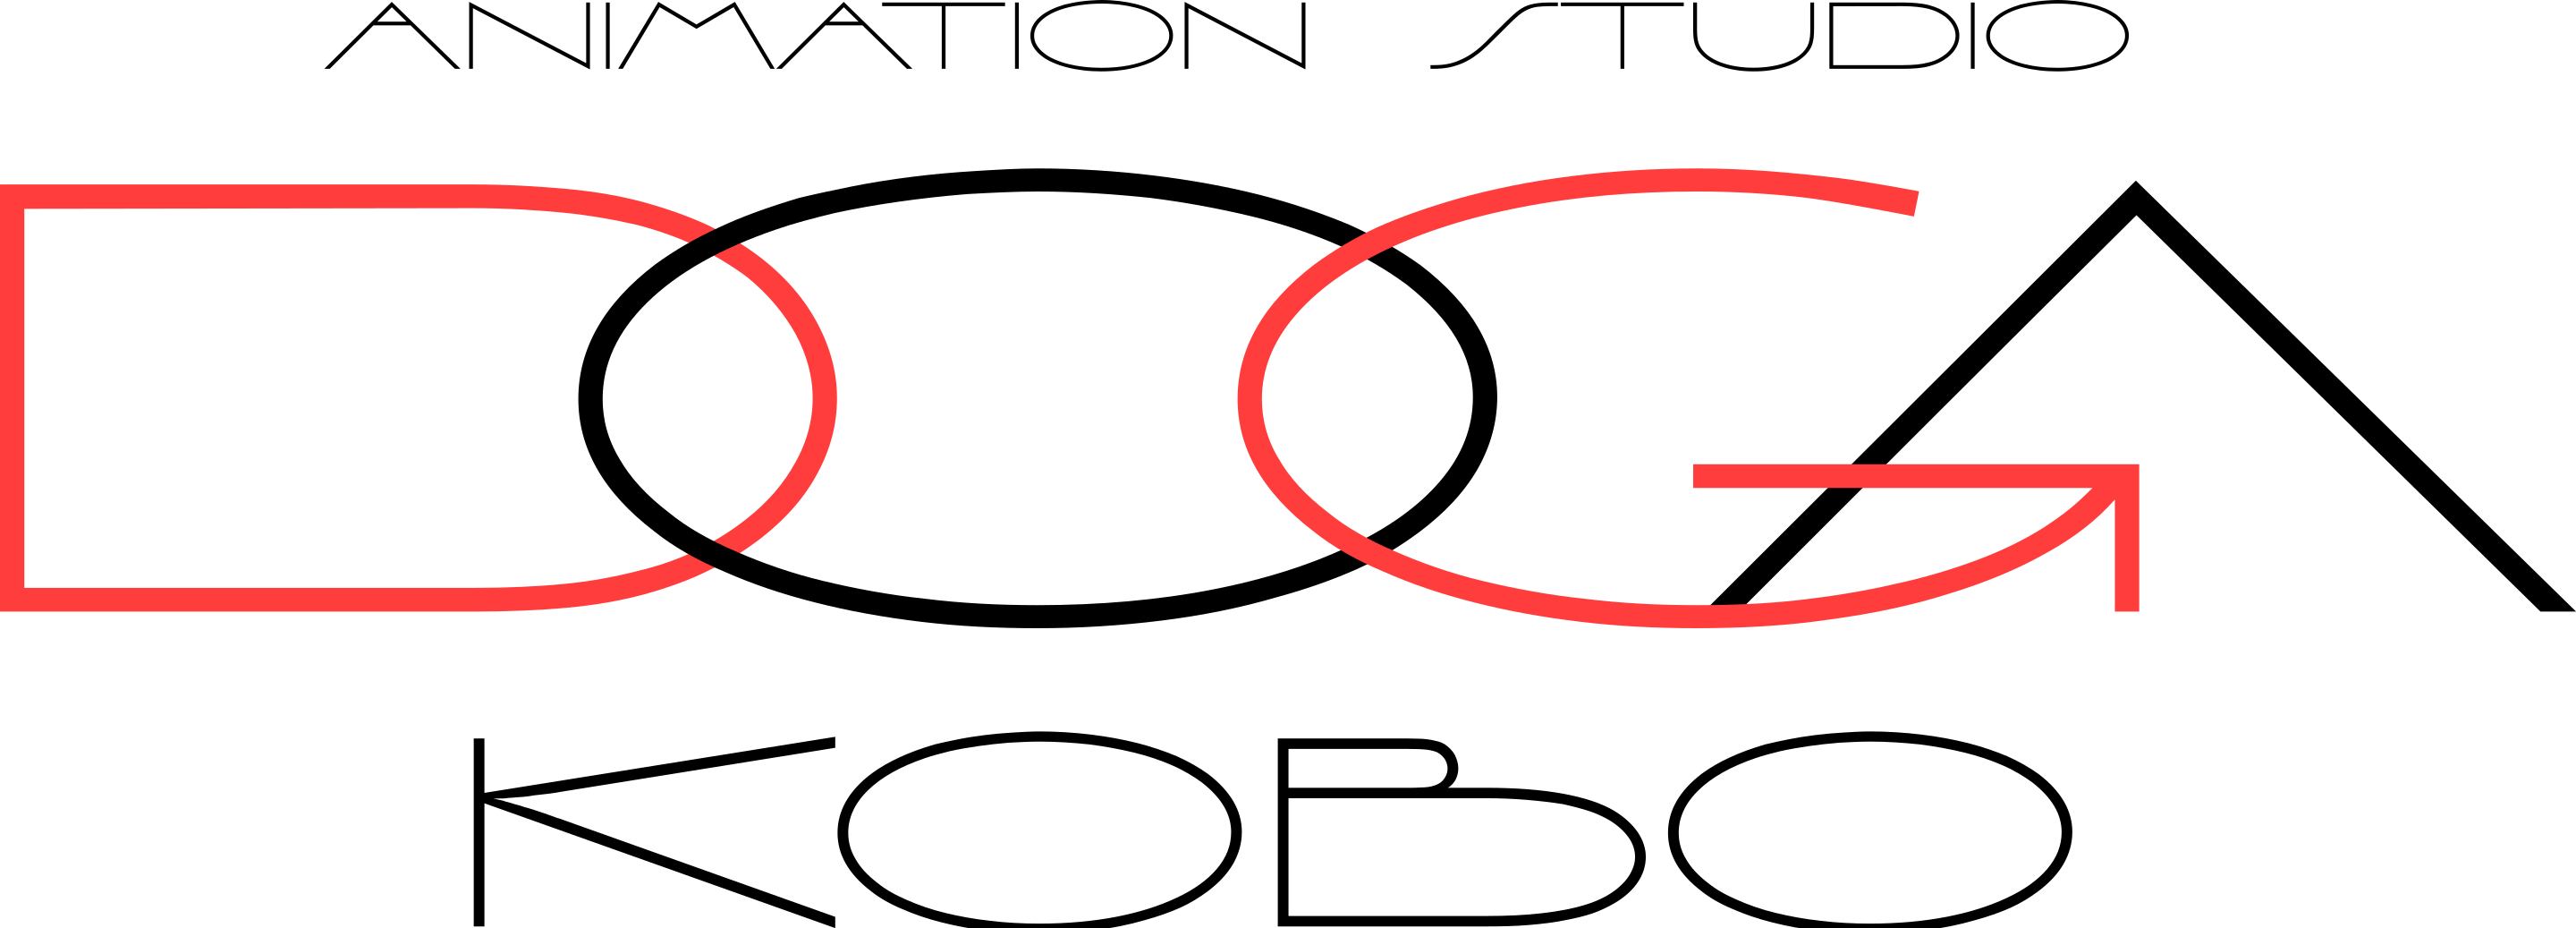 動畫工房logo.png